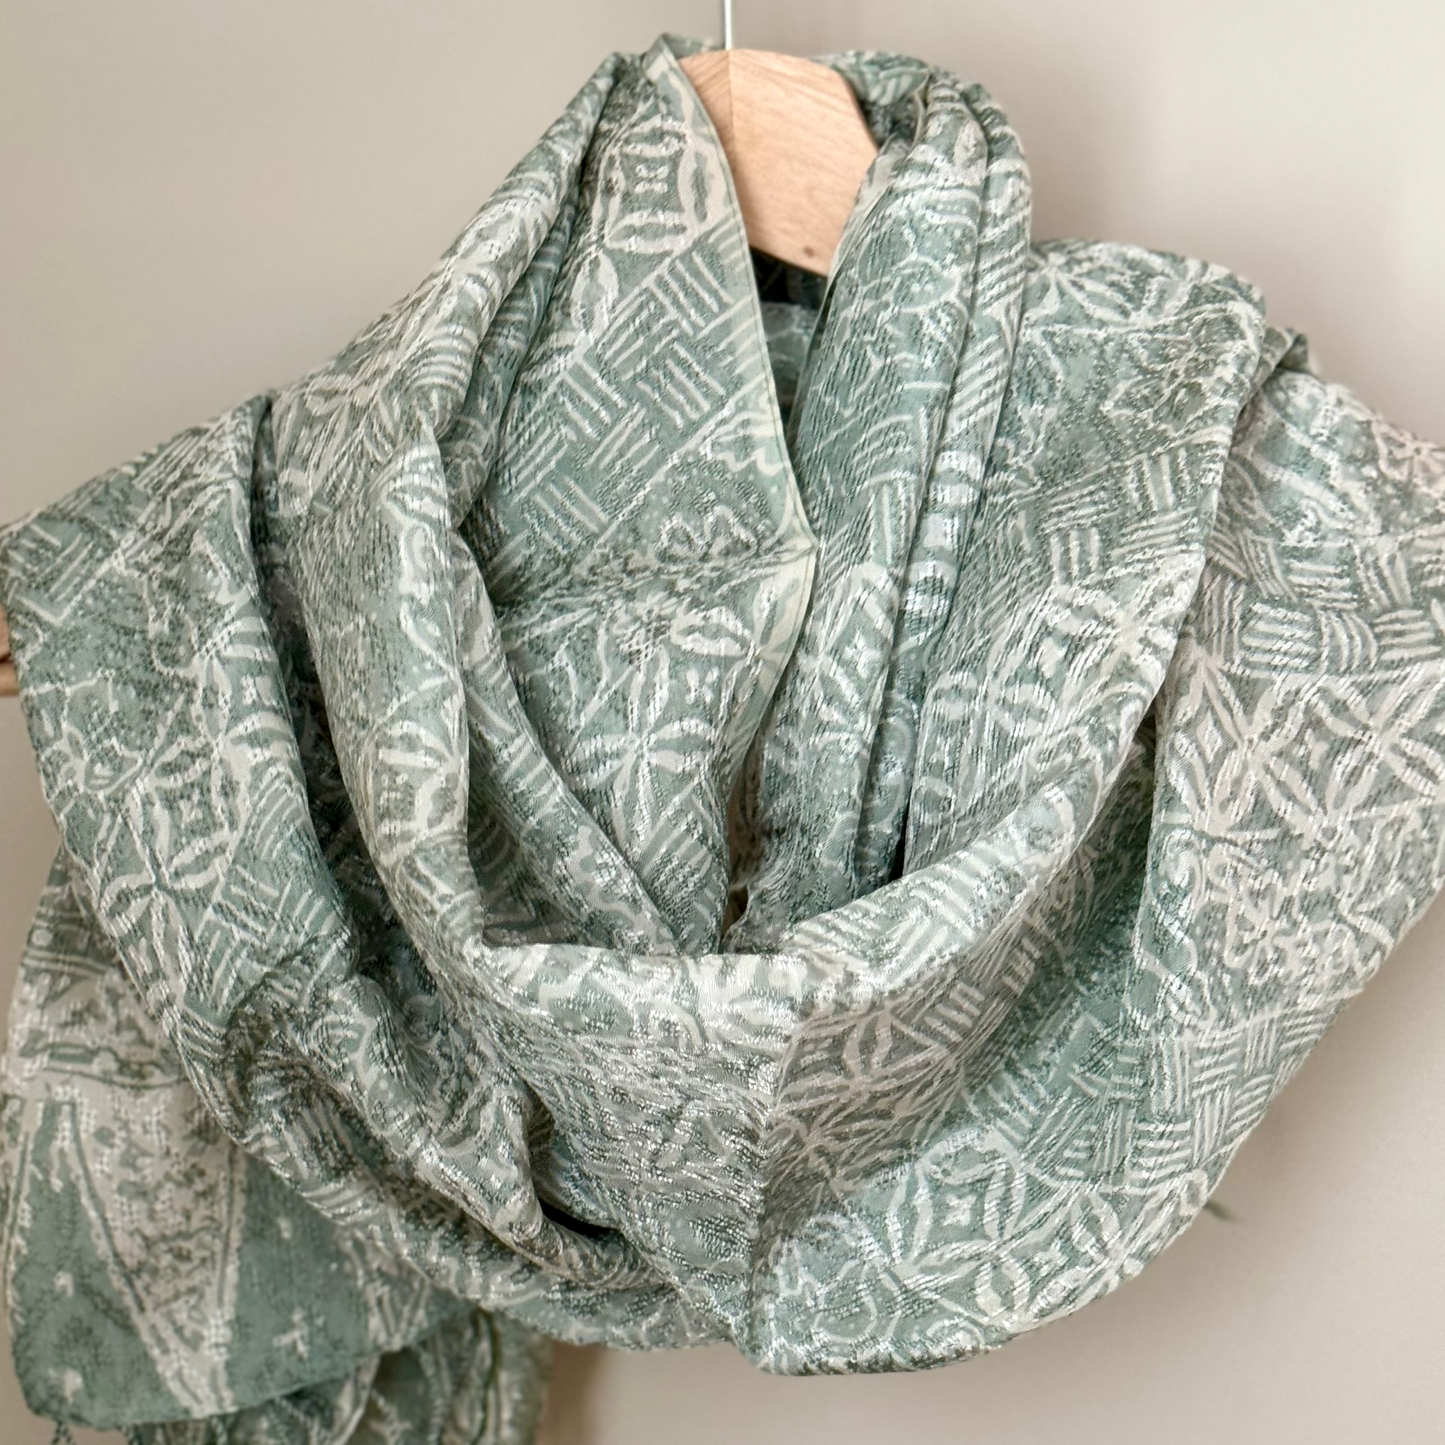 Green batik patterned scarf